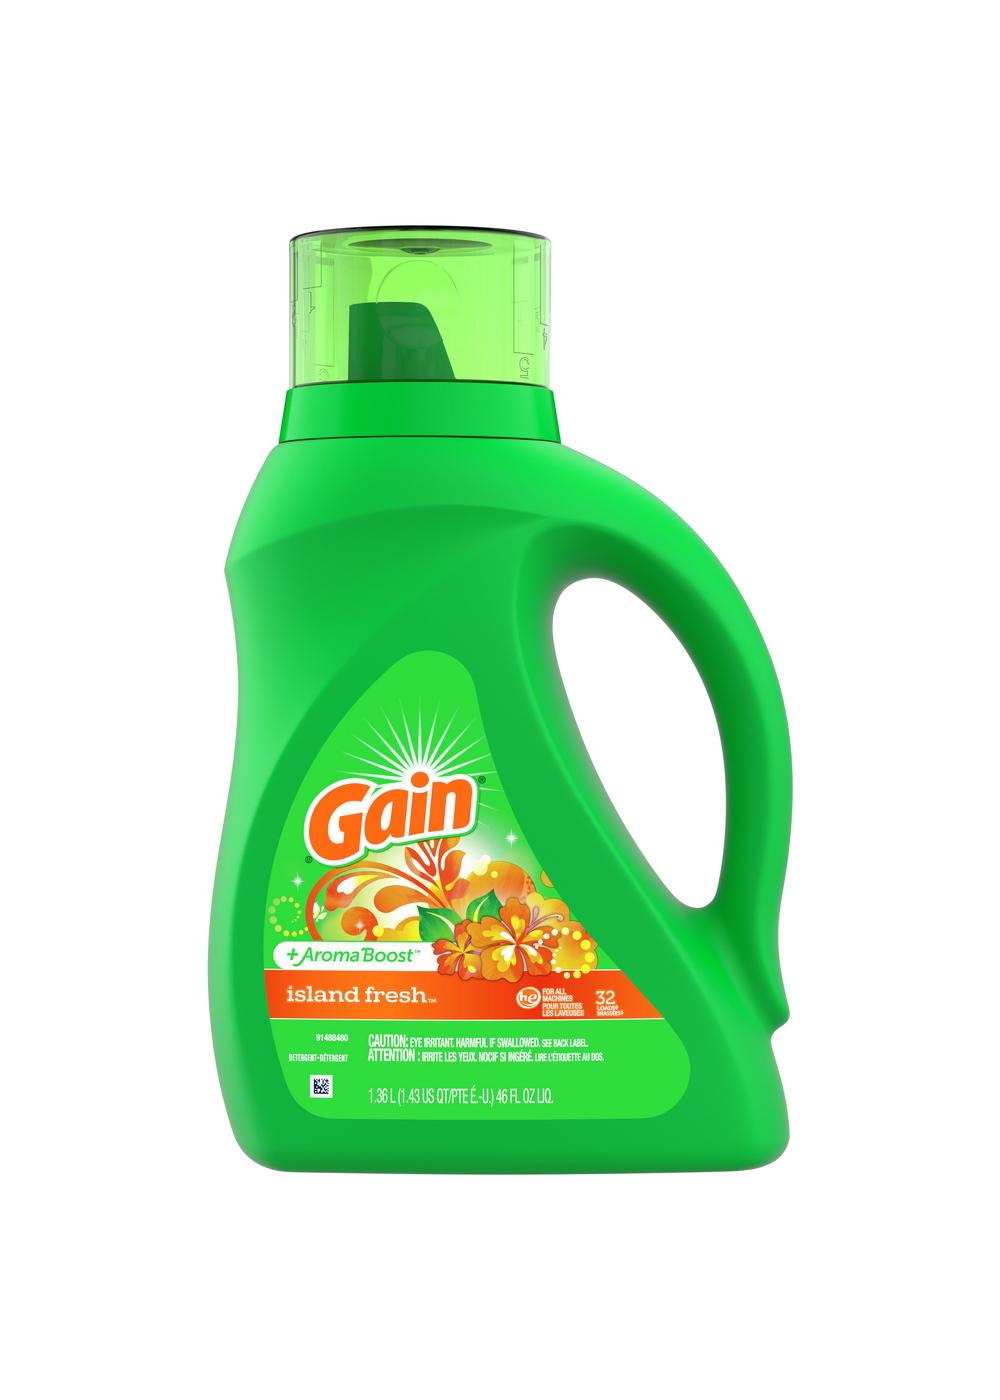 Gain + Aroma Boost HE Liquid Laundry Detergent, 32 Loads - Island Fresh; image 2 of 8